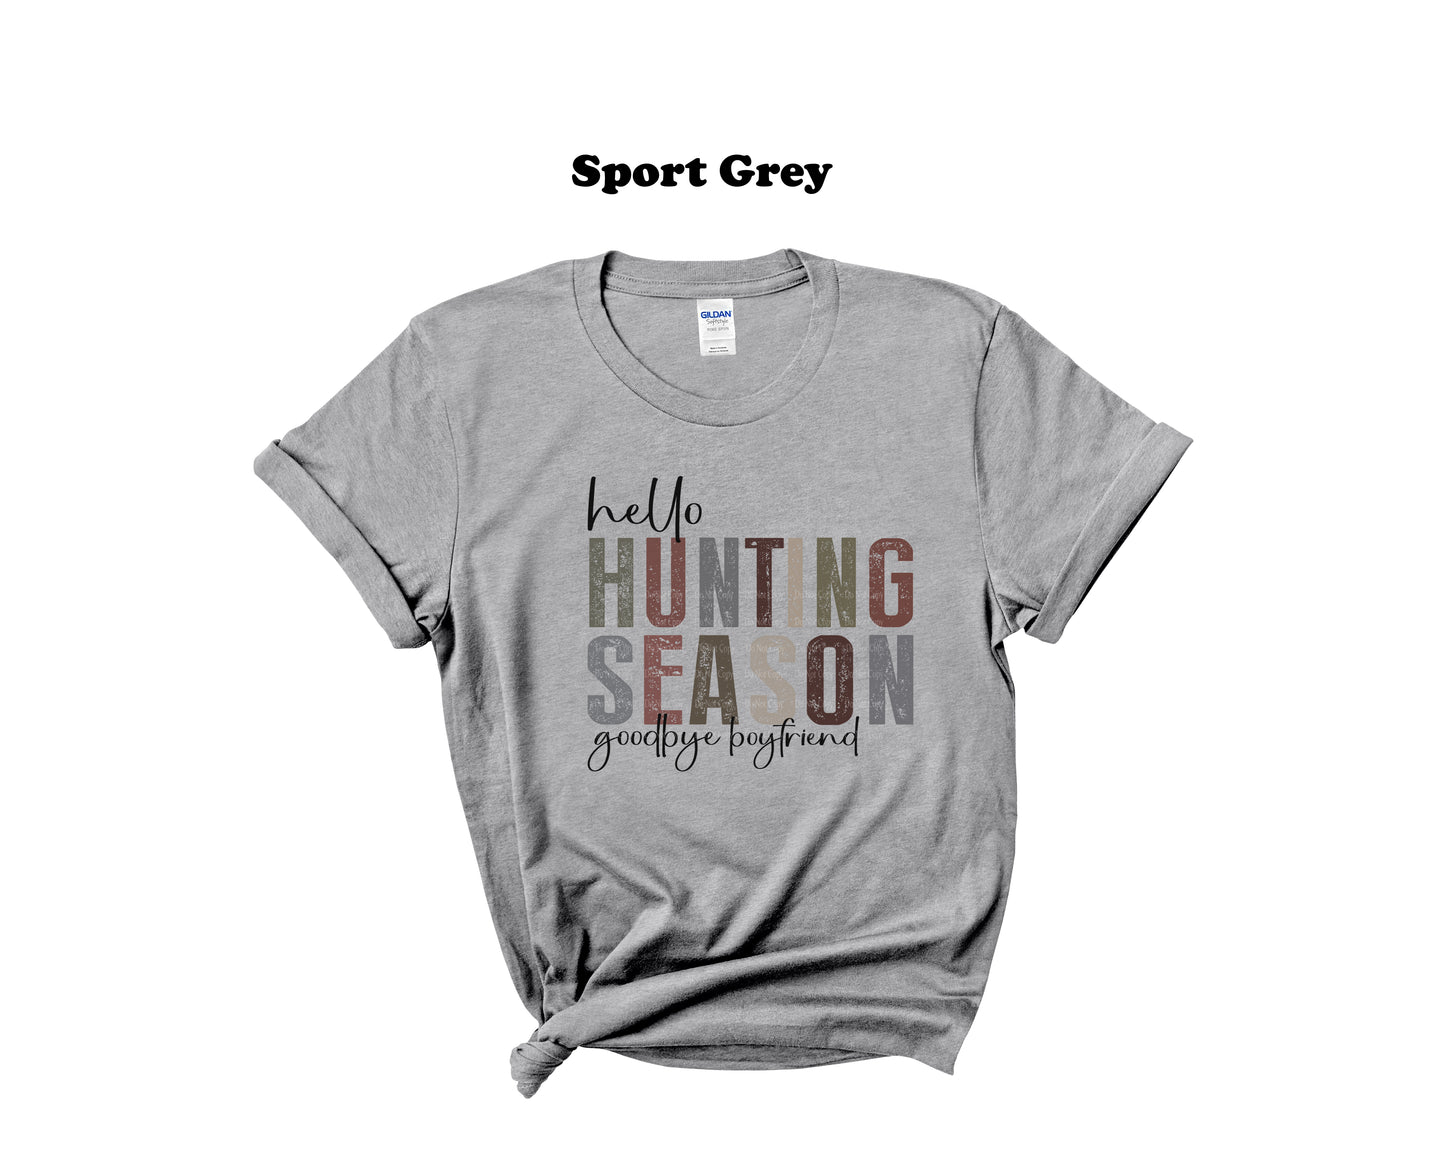 Hello Hunting Season Goodbye Boyfriend T-shirt